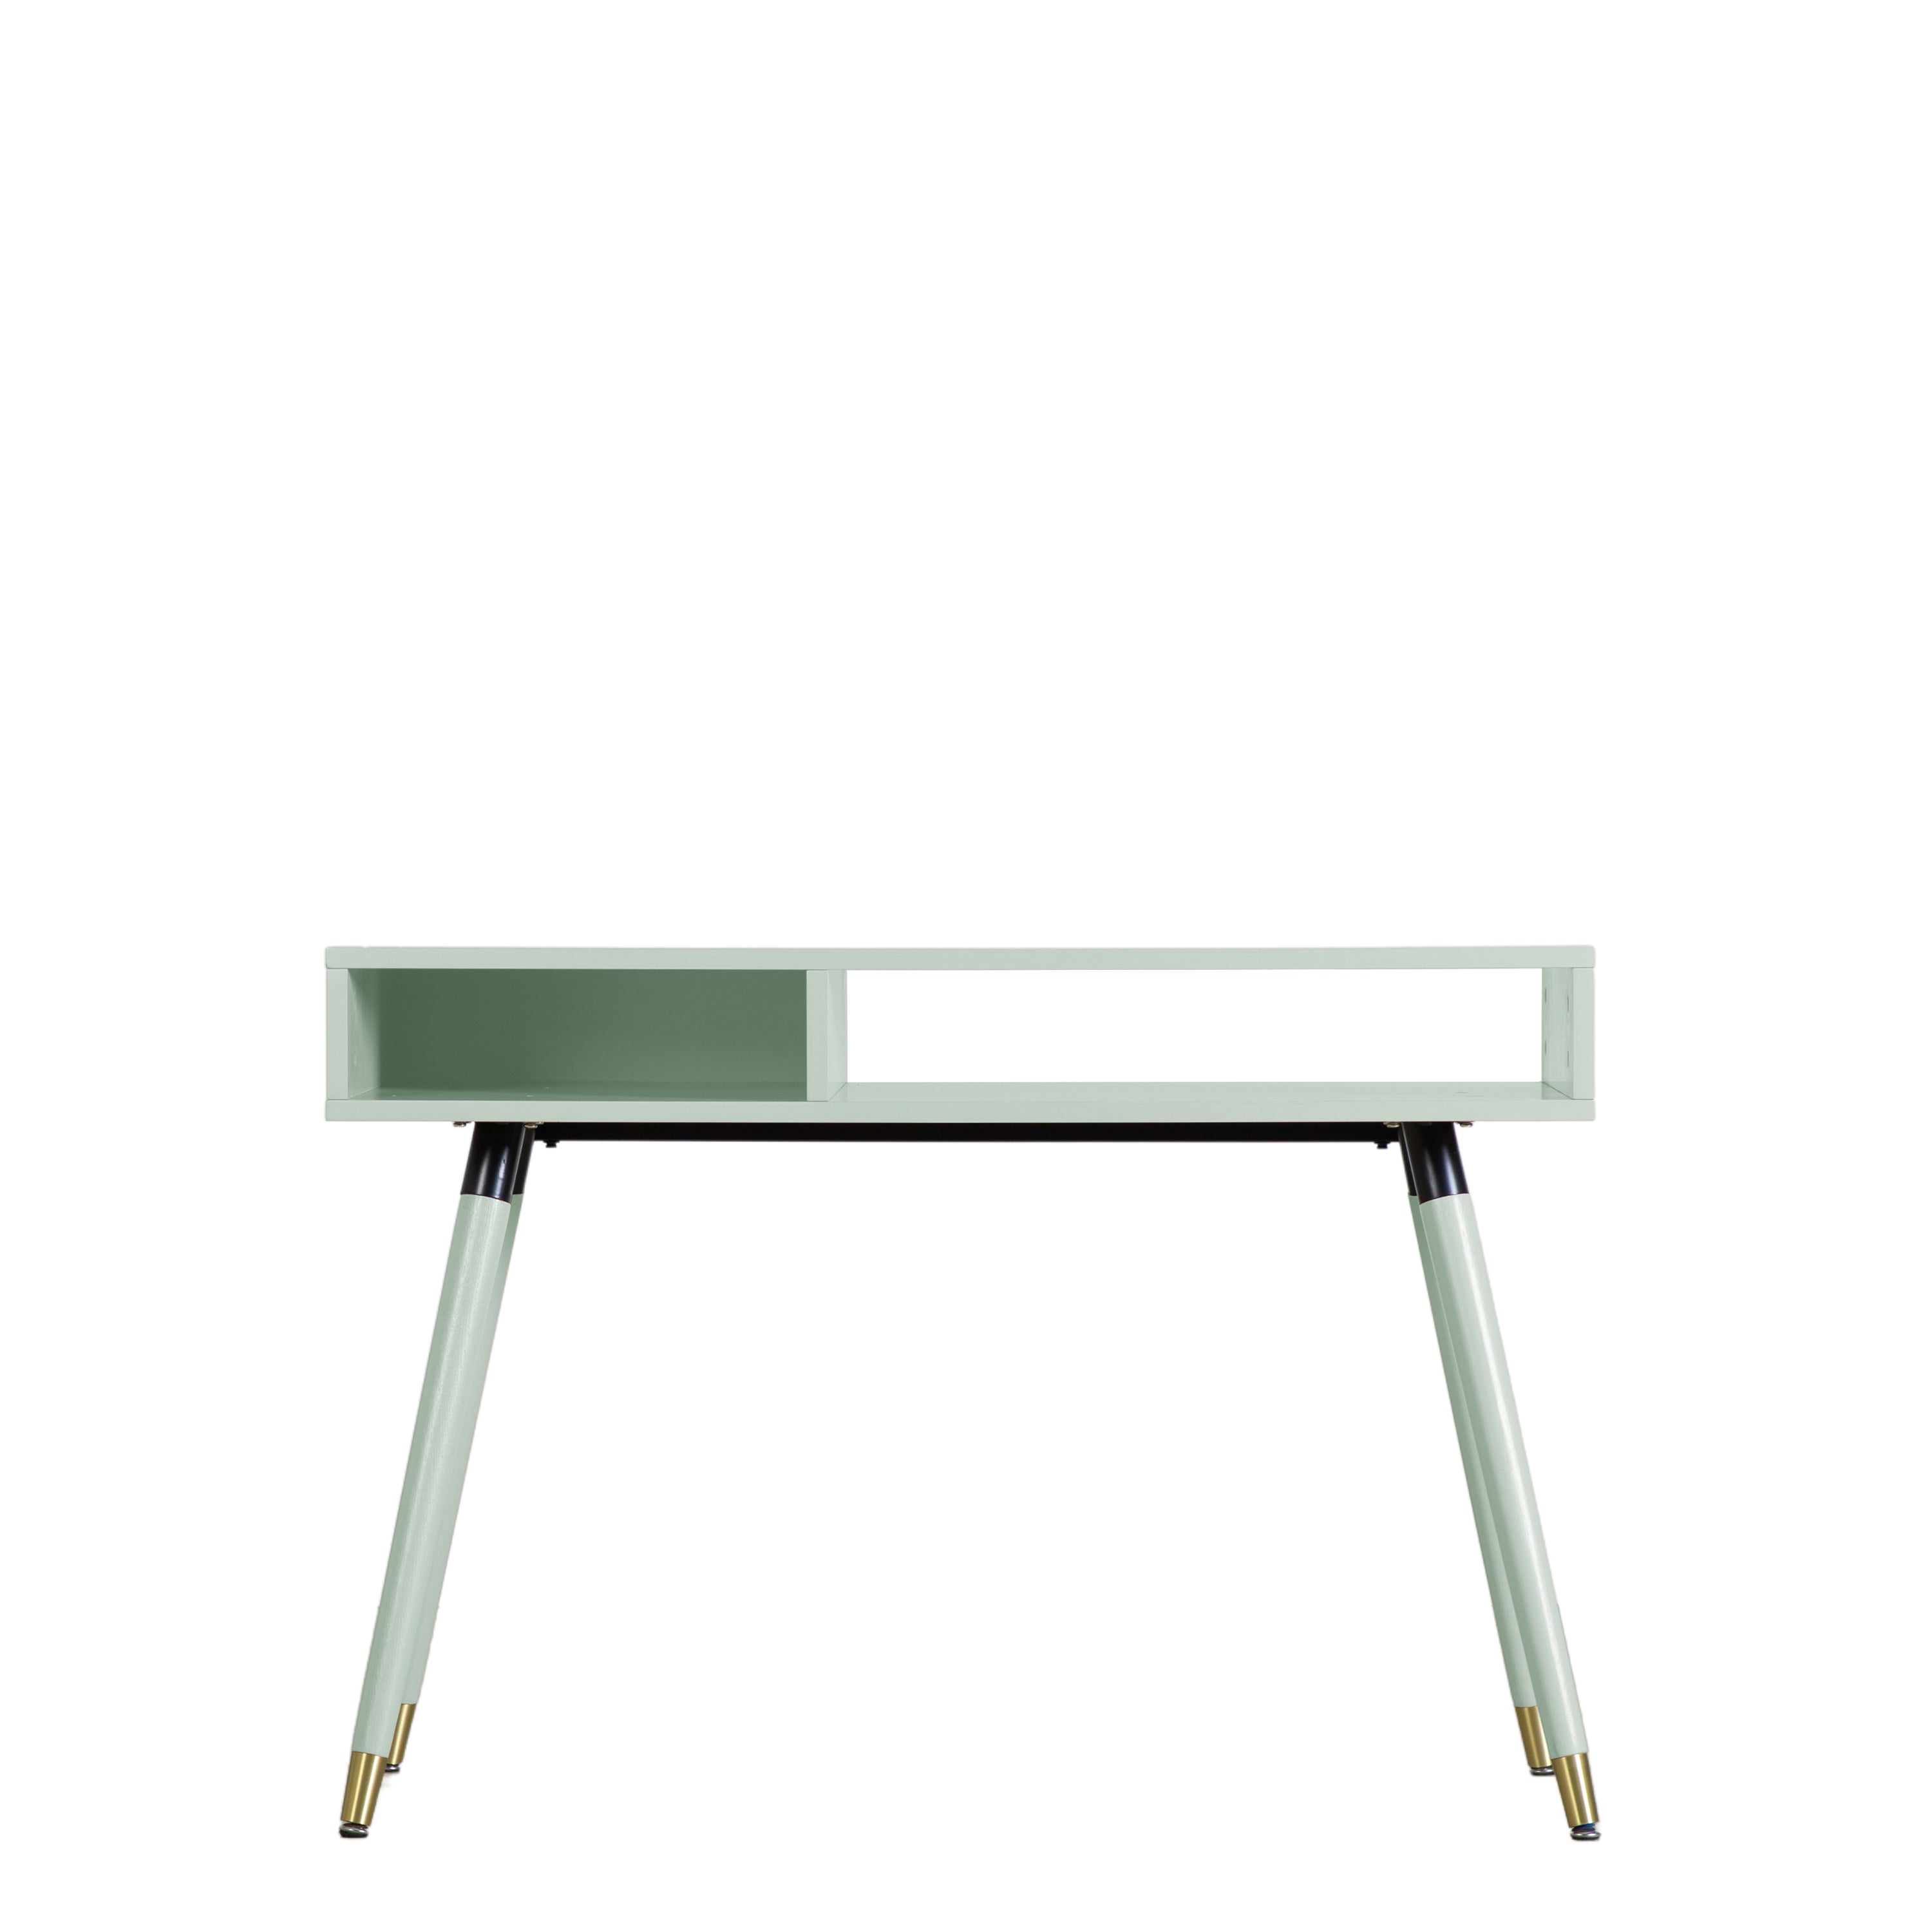 Evissa mint green console table with brass socks and adjustable feet | malletandplane.com